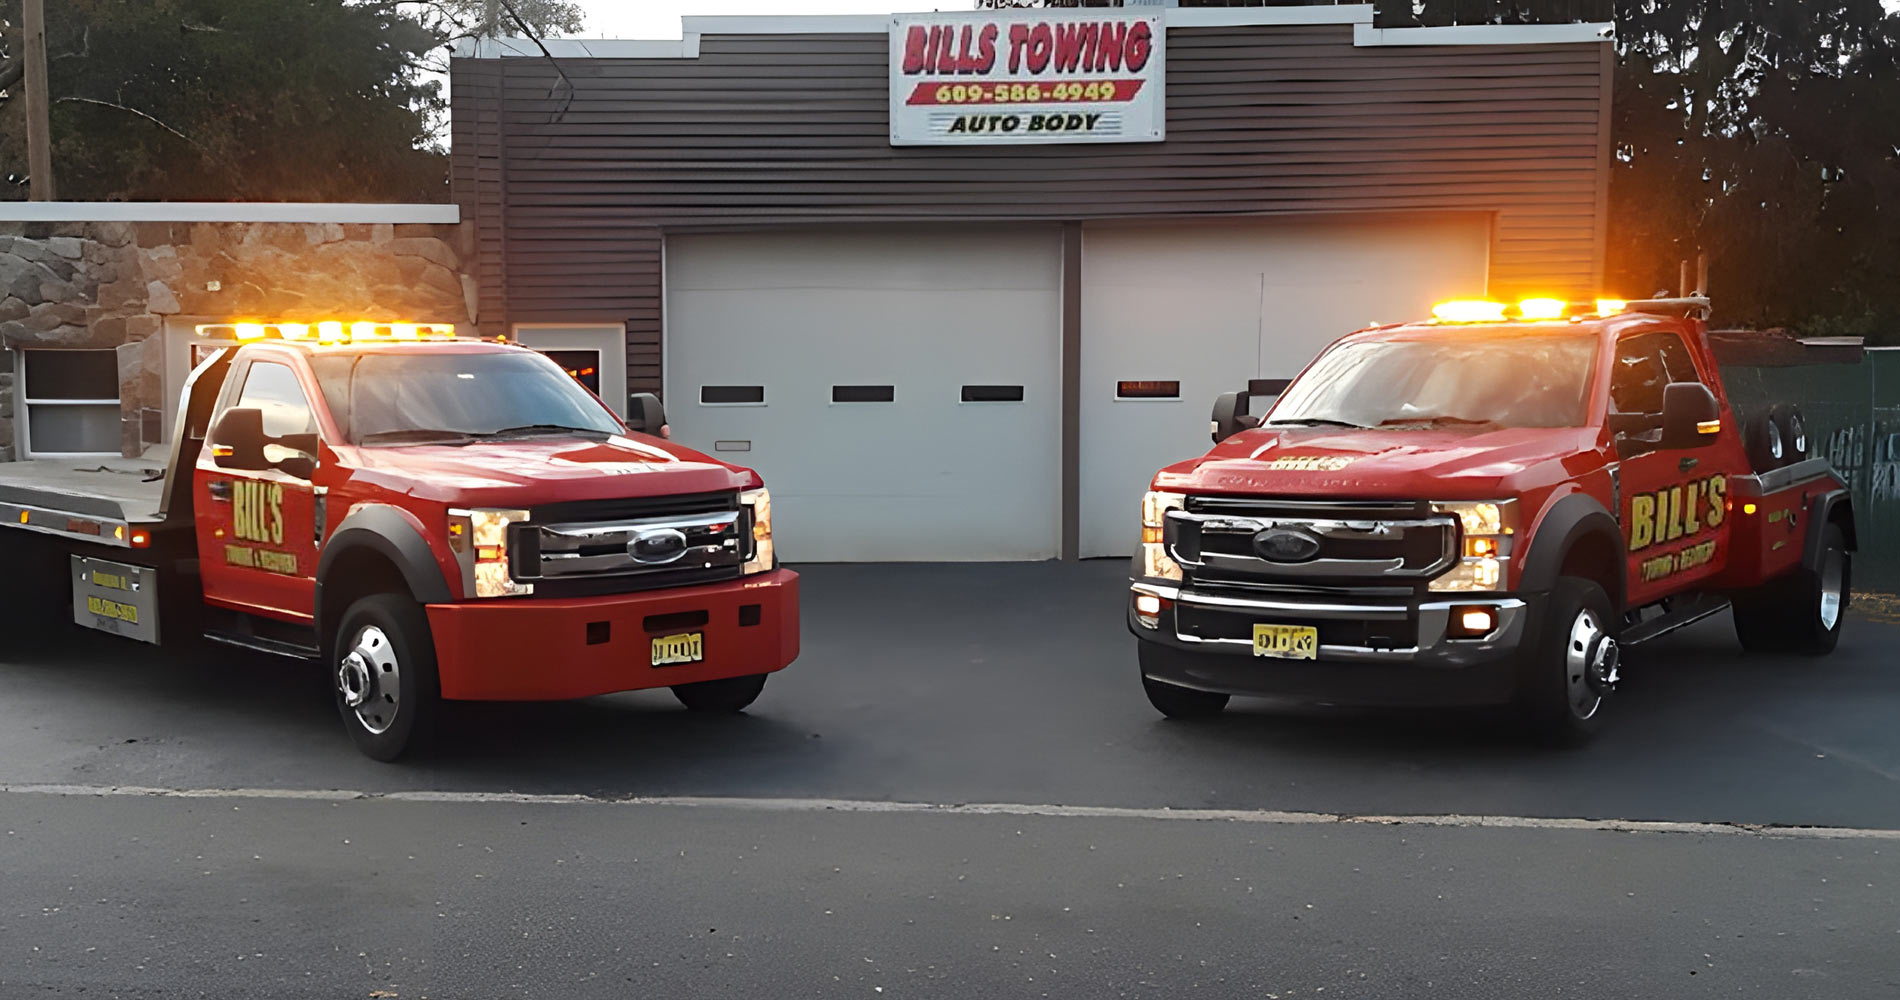 Bill's Towing | East Windsor, NJ